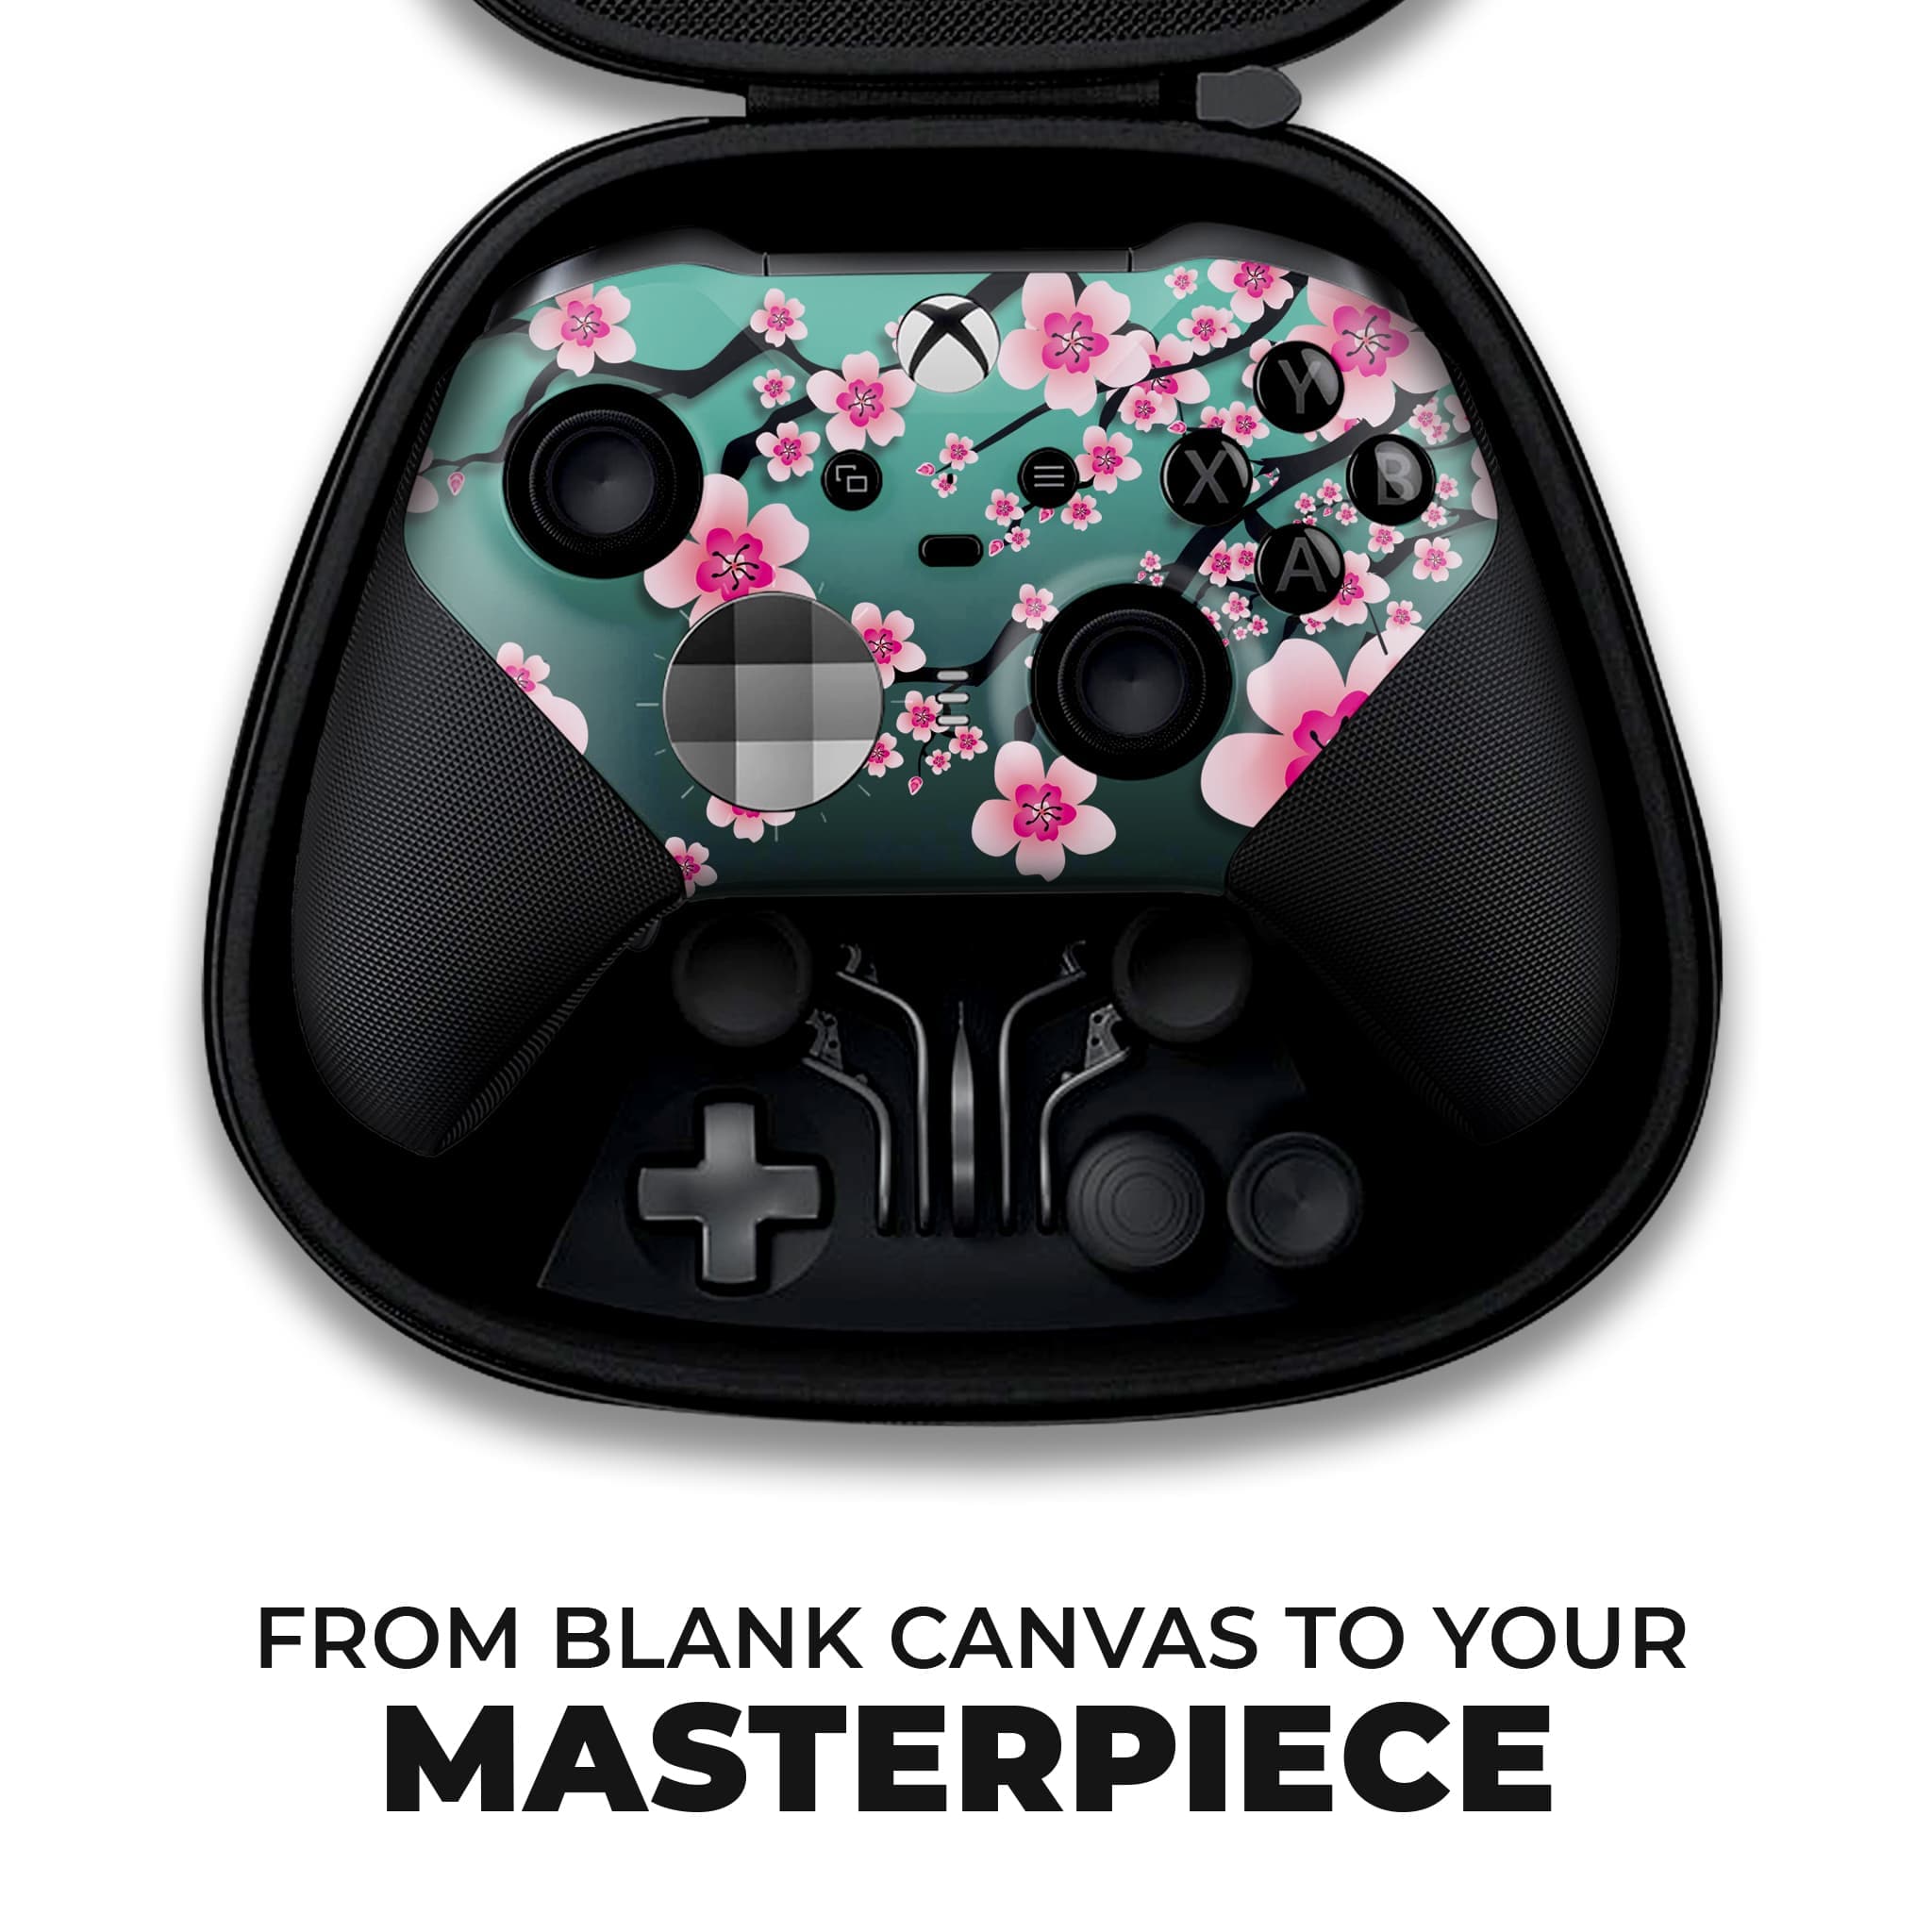 Cherry Blossom Xbox Elite Series 2 Controller: Xbox Elite Controller 2 - Dream Controller